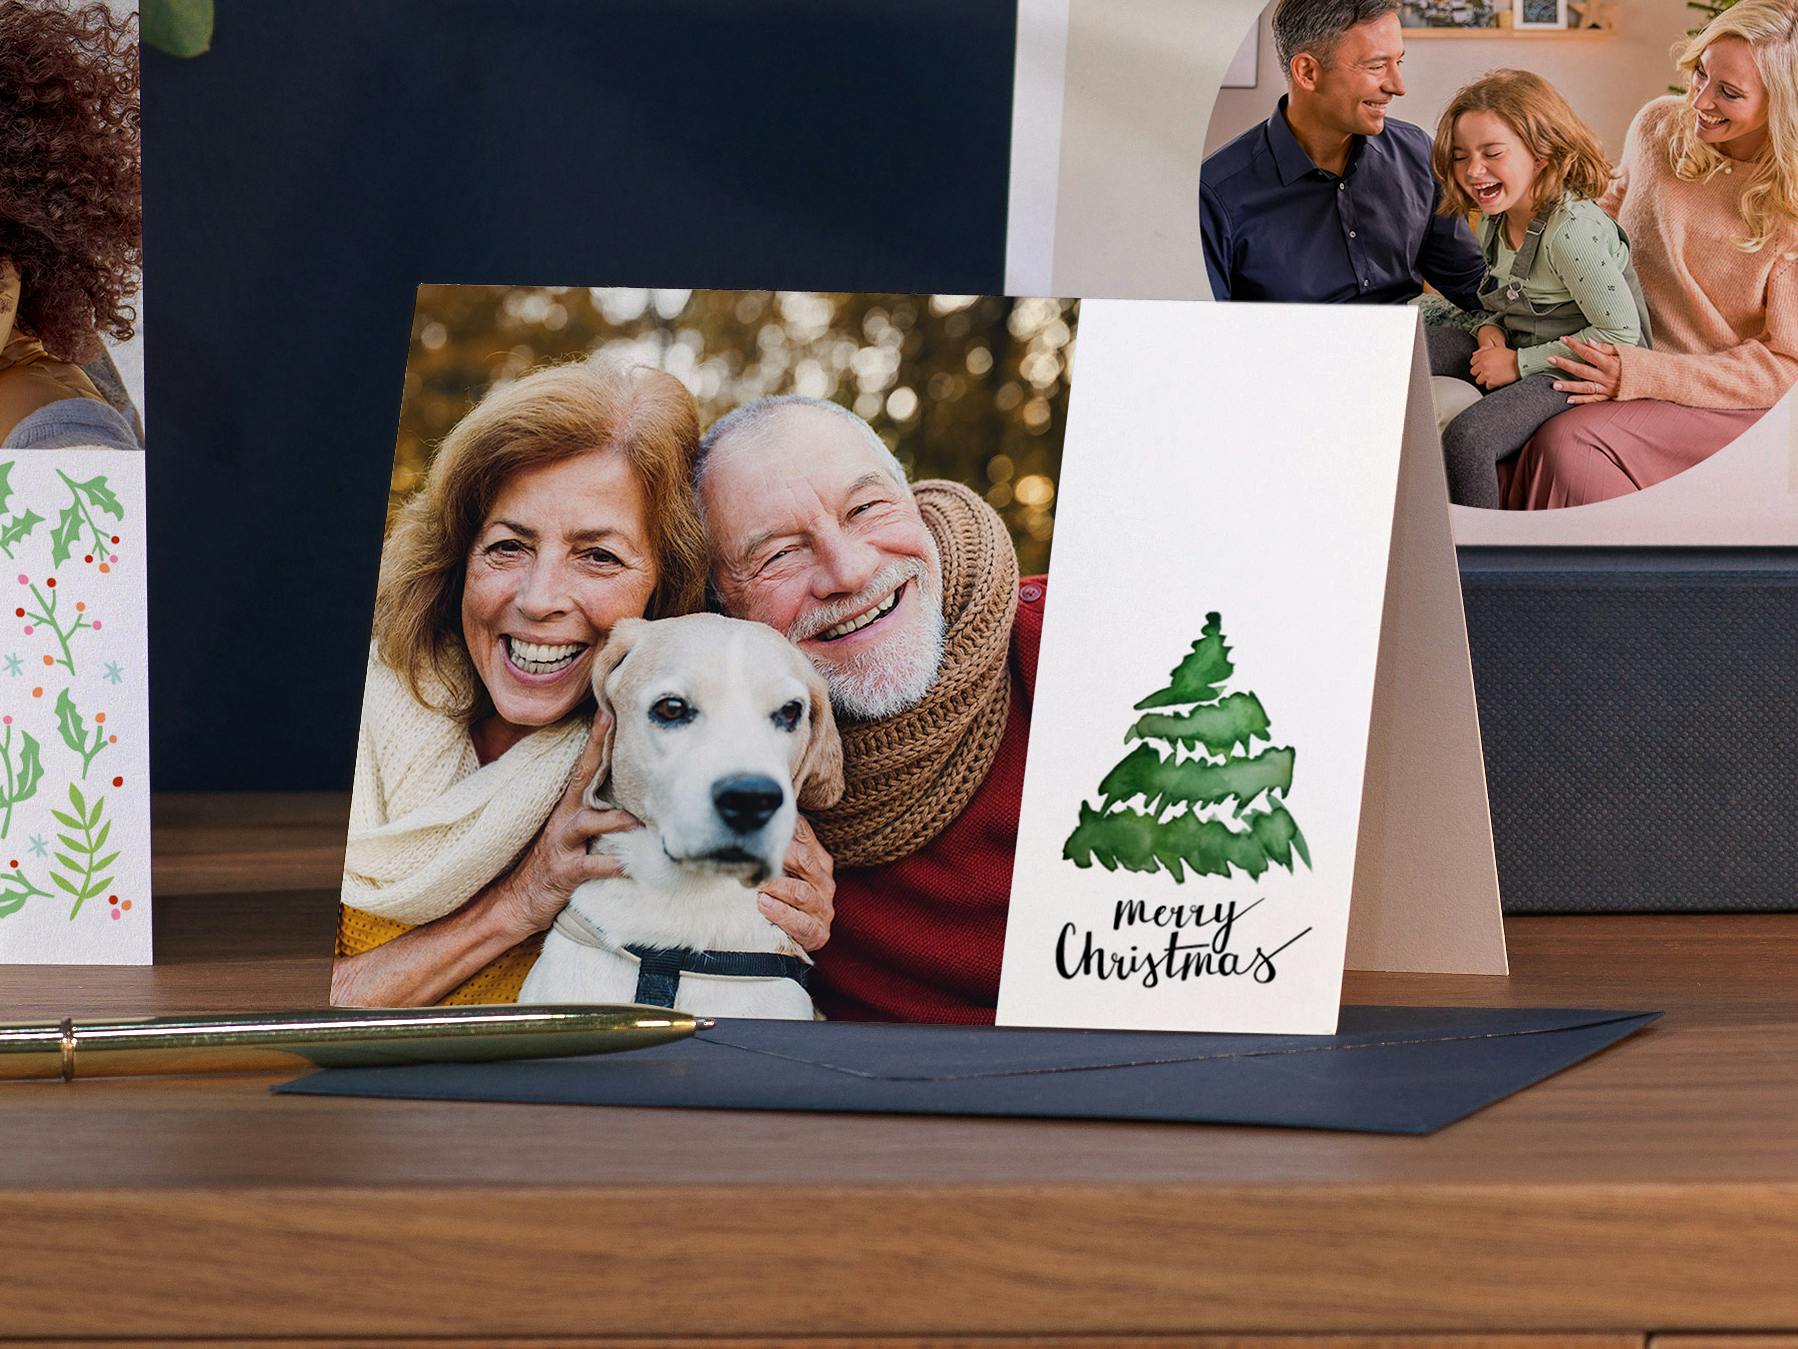 Tre julekort med familiefotos jule design. 